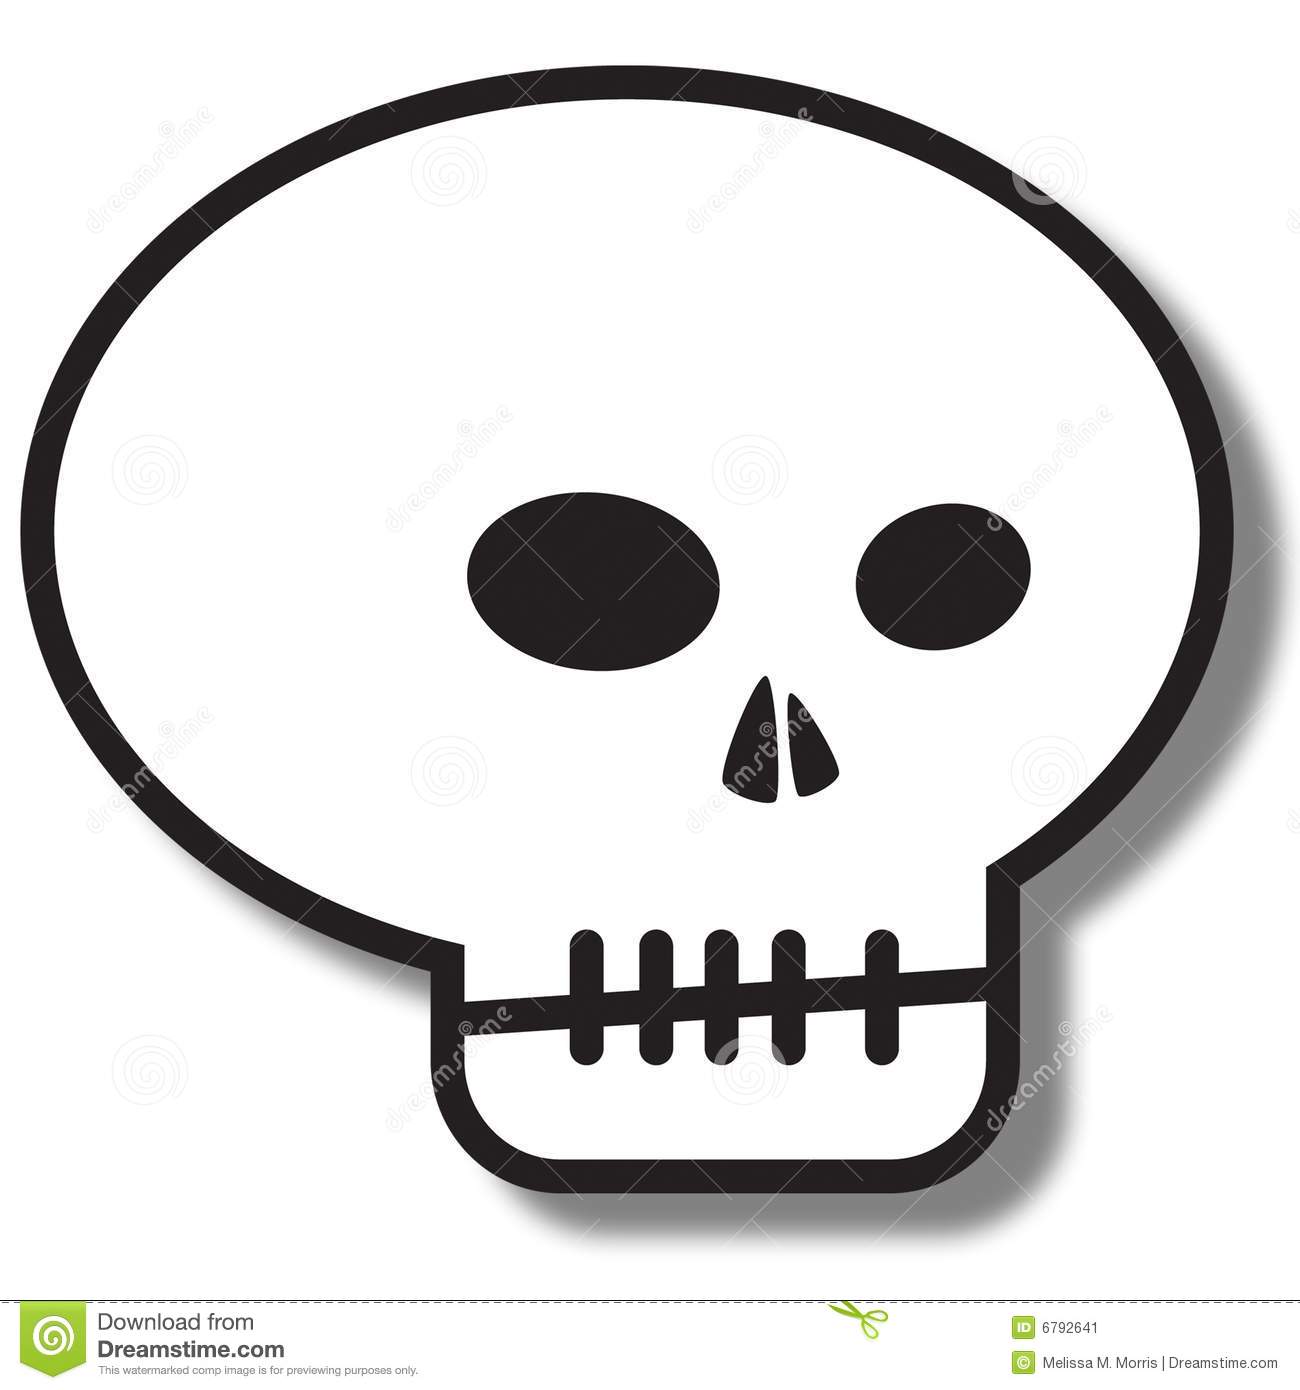 Simple Skull Icon Stock Image   Image  6792641